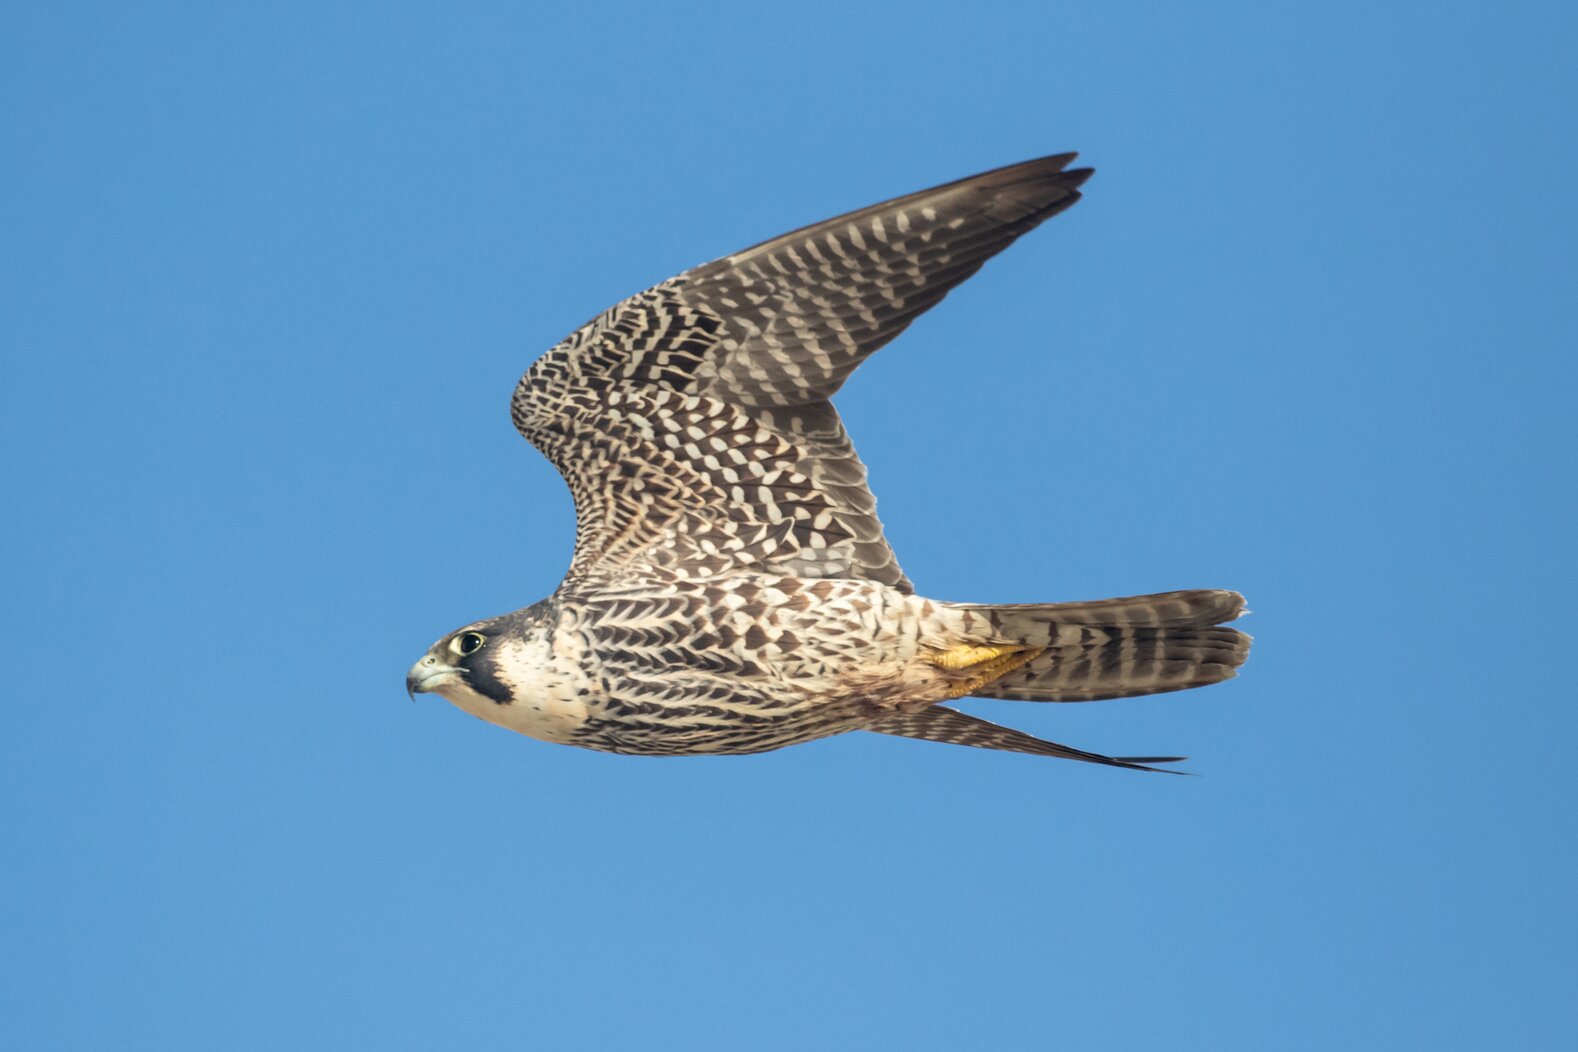 Peregrine Falcons (here, an immature bird) nest on the Verrazzano-Narrows Bridge. Photo: <a href="https://www.flickr.com/photos/144871758@N05/" target="_blank" >Ryan F. Mandelbaum</a>